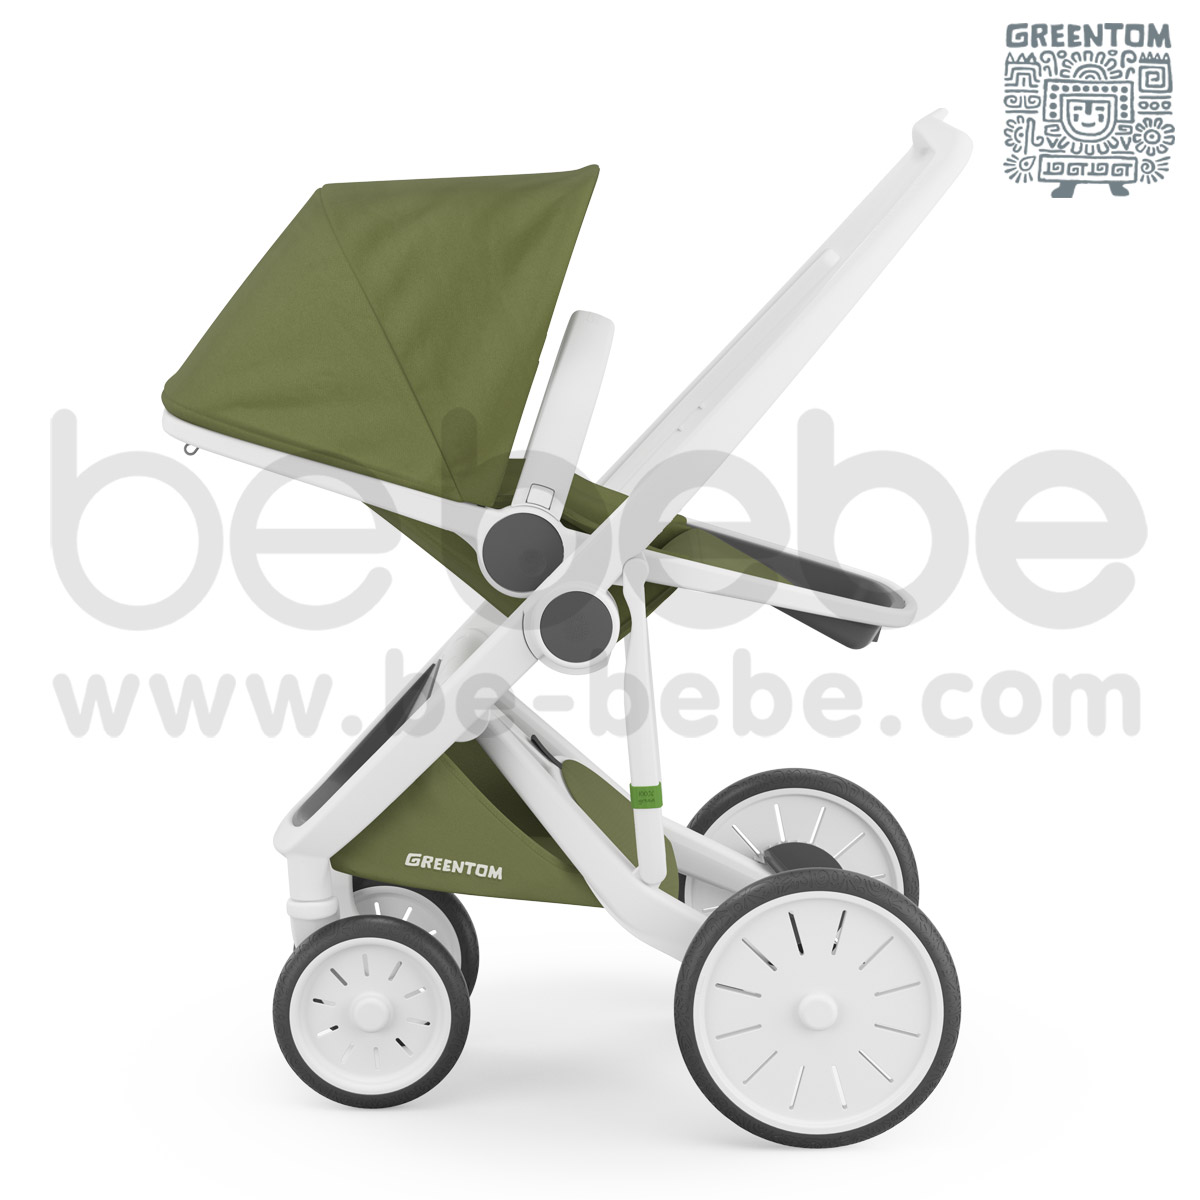 Greentom : Revesible White Frame Stroller - Olive 